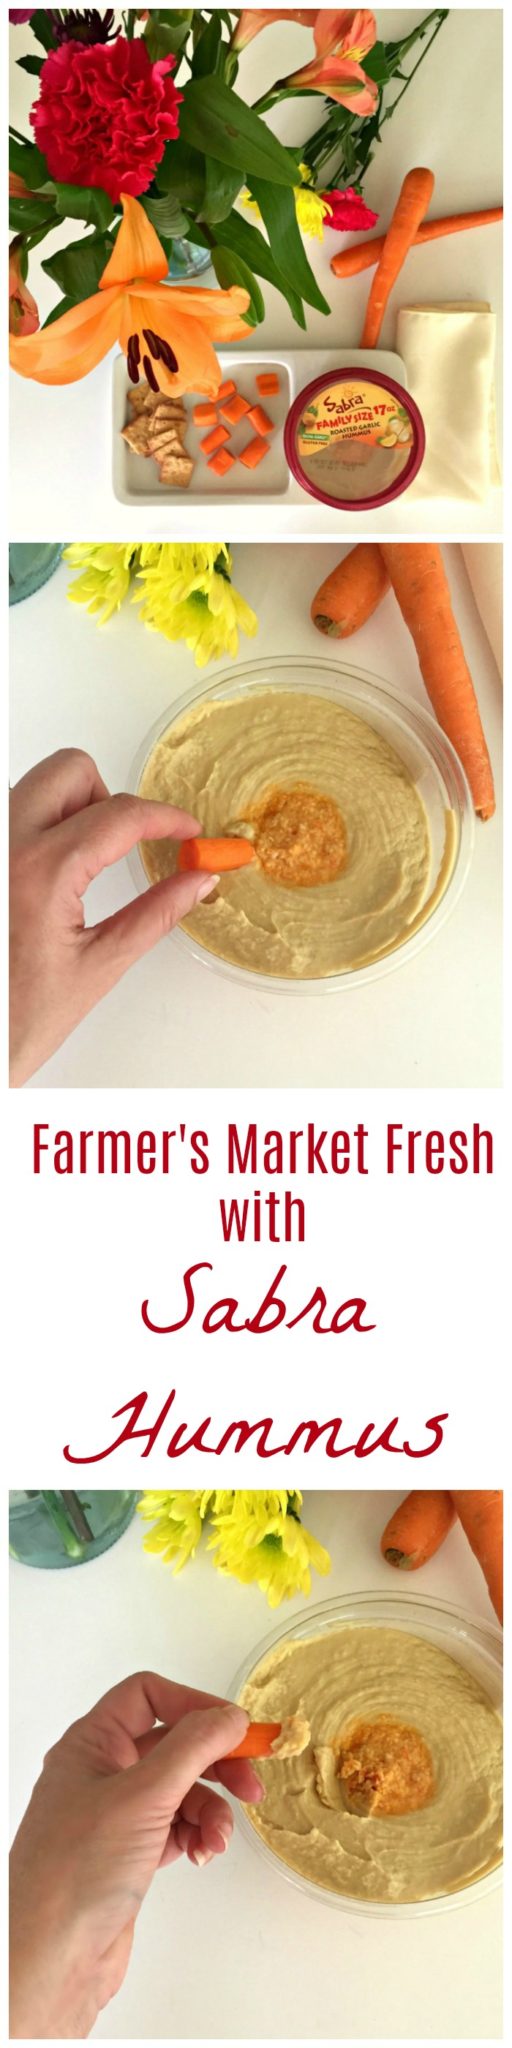 Sabra hummus with Farmer's Market Fresh vegetables #walmartfarmersmarket